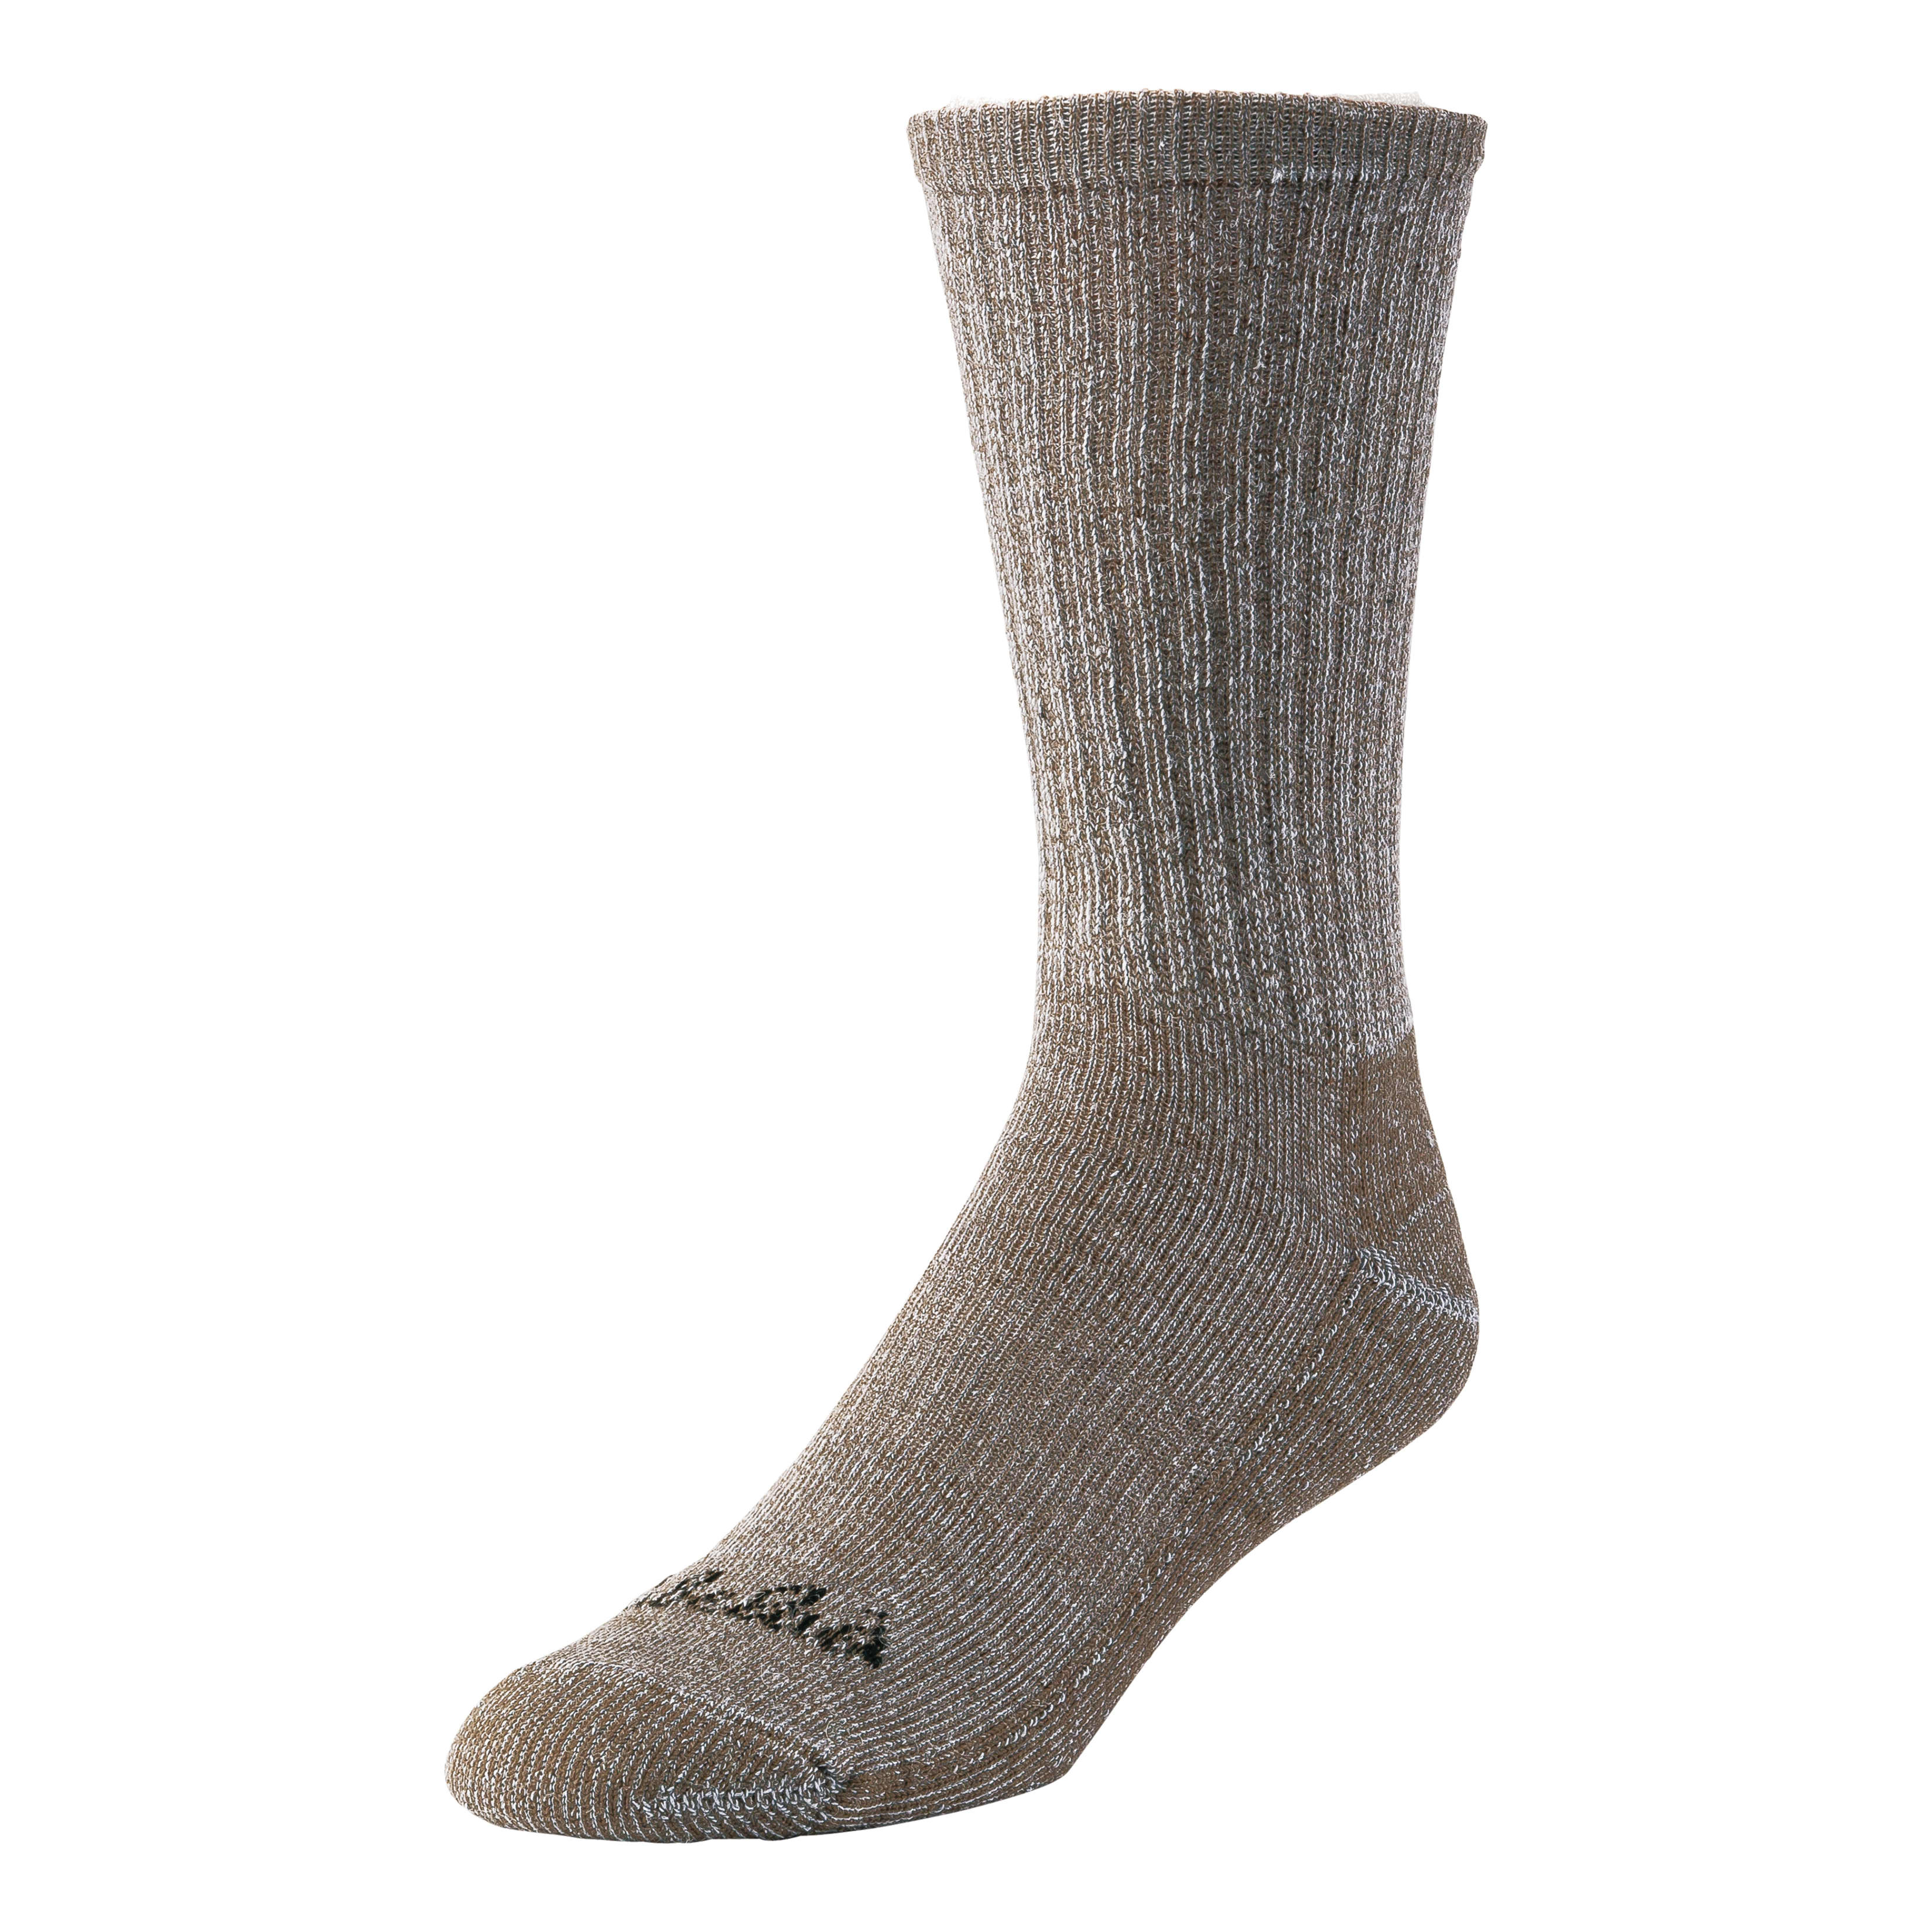 Cabela's Lightweight Wool Crew Socks - 4-Pack - Brown